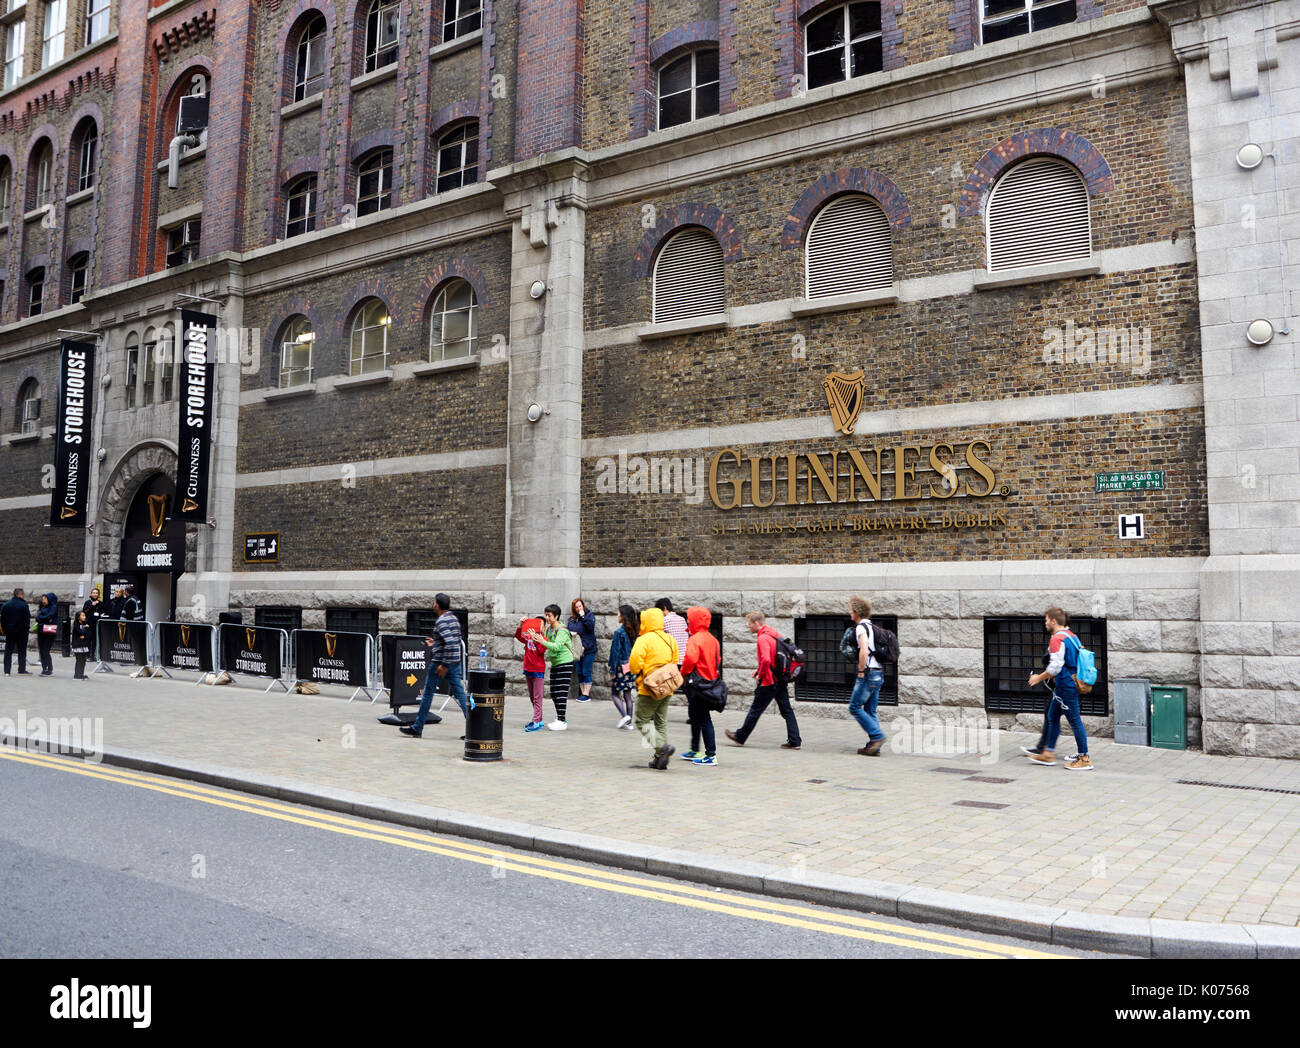 DUBLIN, Irland - 3. AUGUST 2017: Guinness Storehouse in Dublin. Das Guinness Storehouse ist eine touristische Attraktion am St. James's Gate Brewery in Dublin, ICH Stockfoto